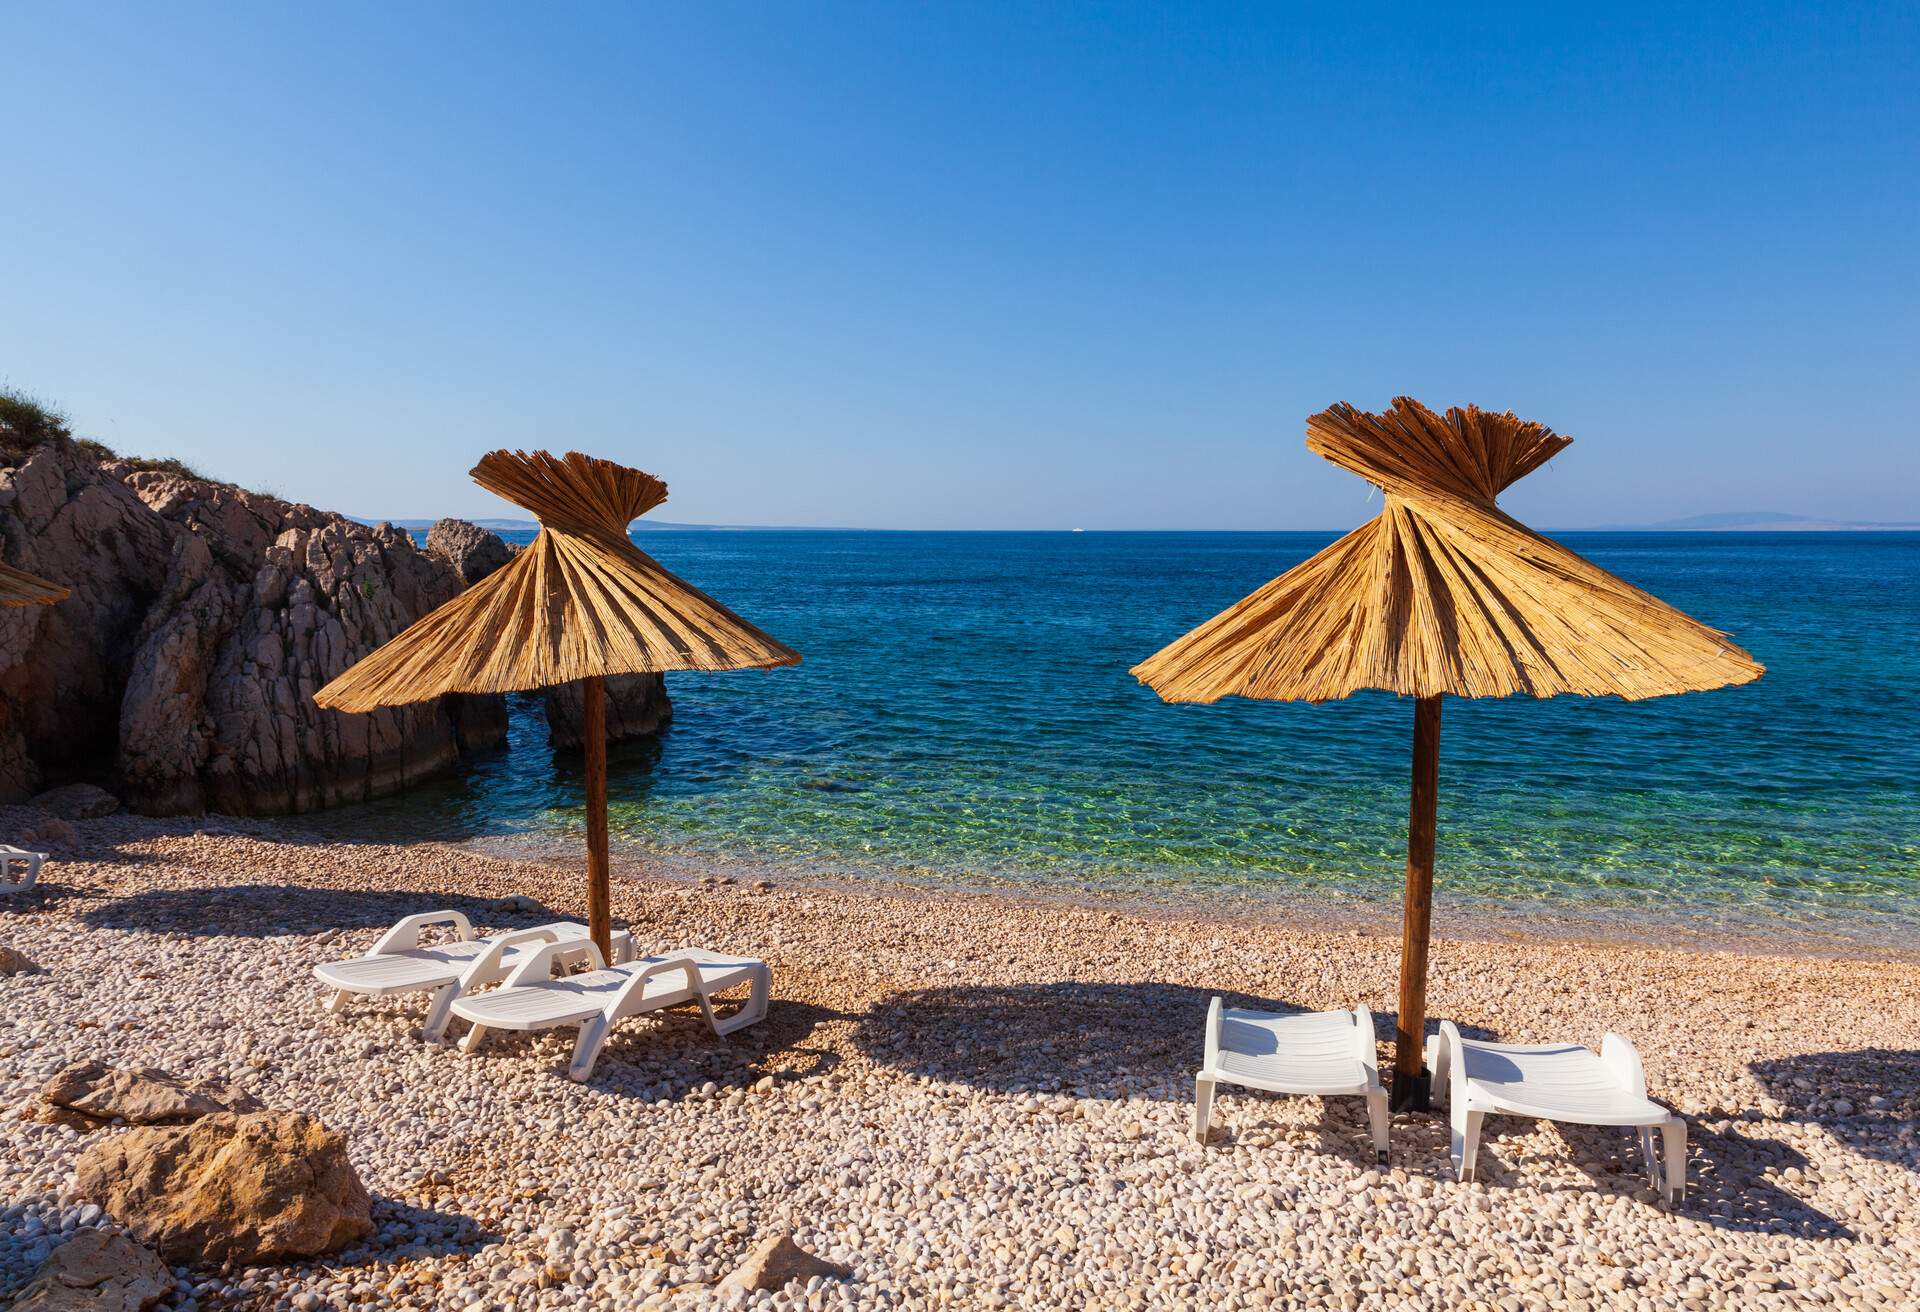 View of the straw umbrellas in the beautiful Oprna beach in the adriatic bay of the Krk island, Croatia